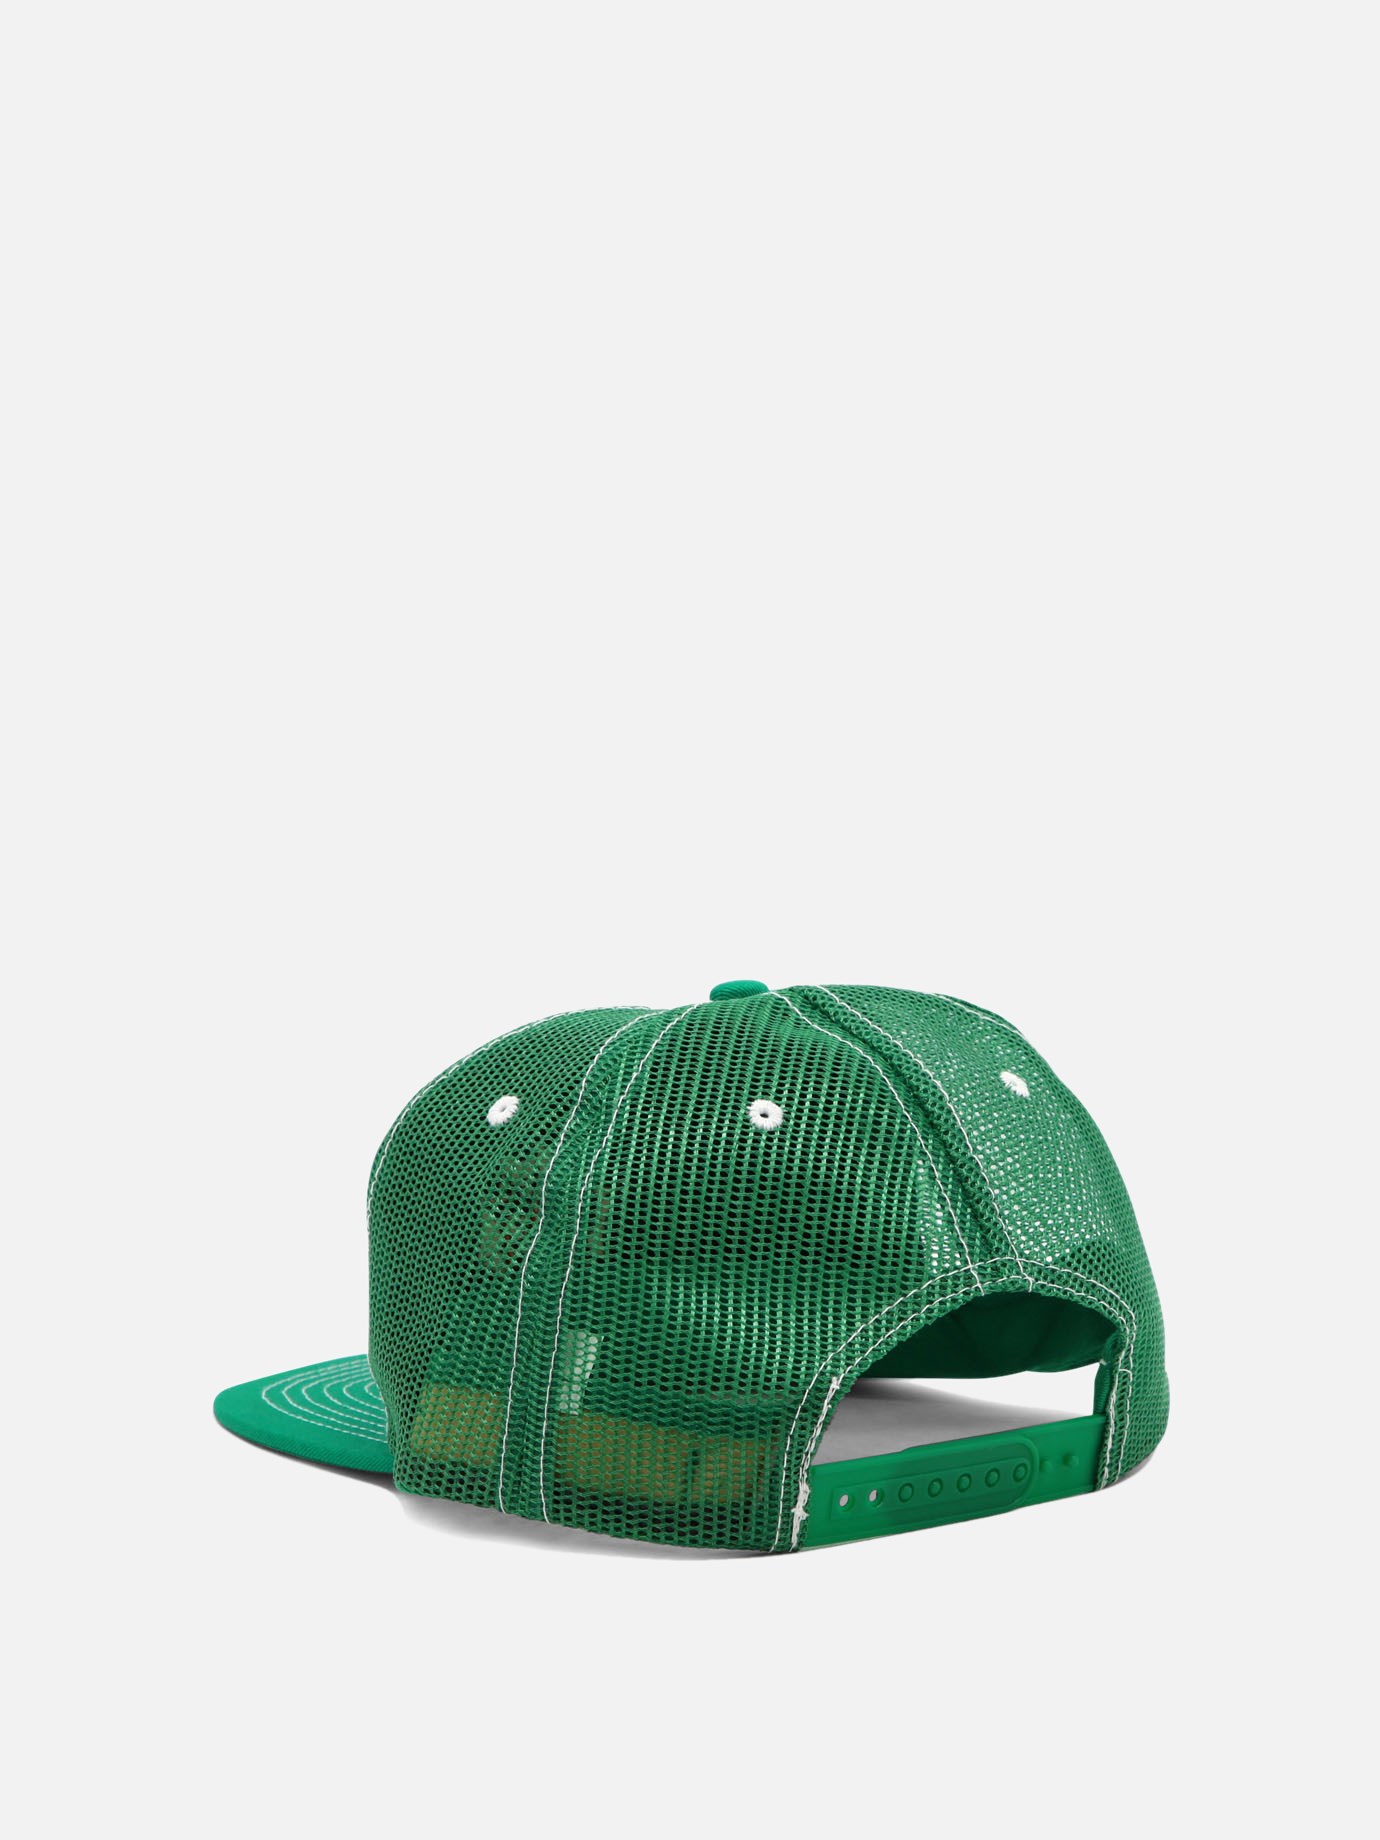  Web  baseball cap by Call Me 917